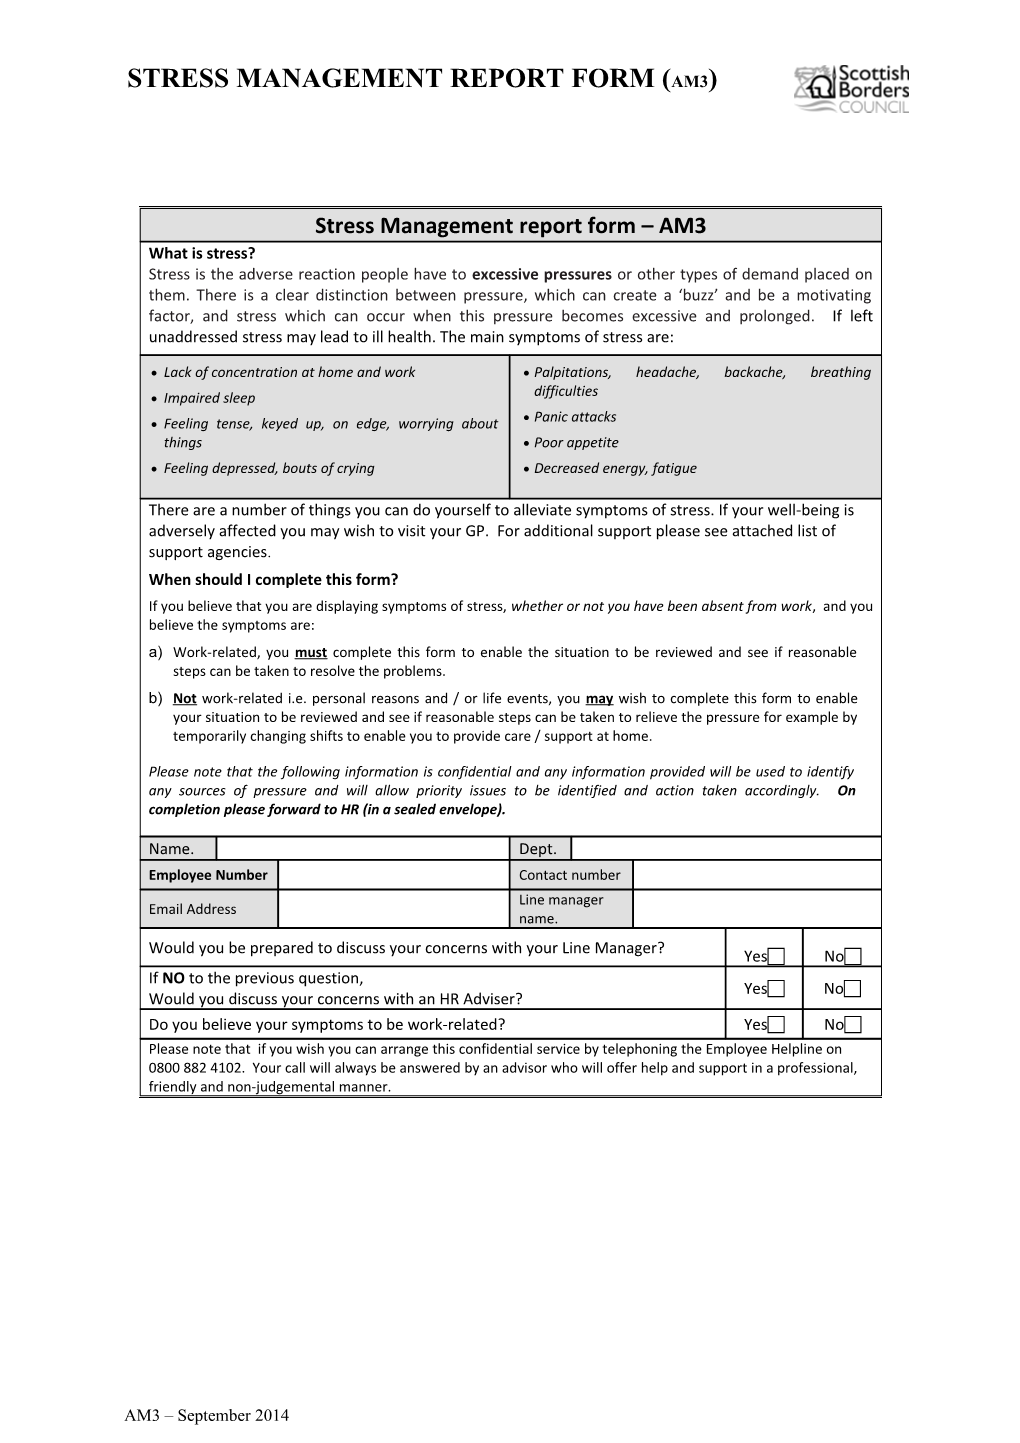 Stress Management Report Form AM3